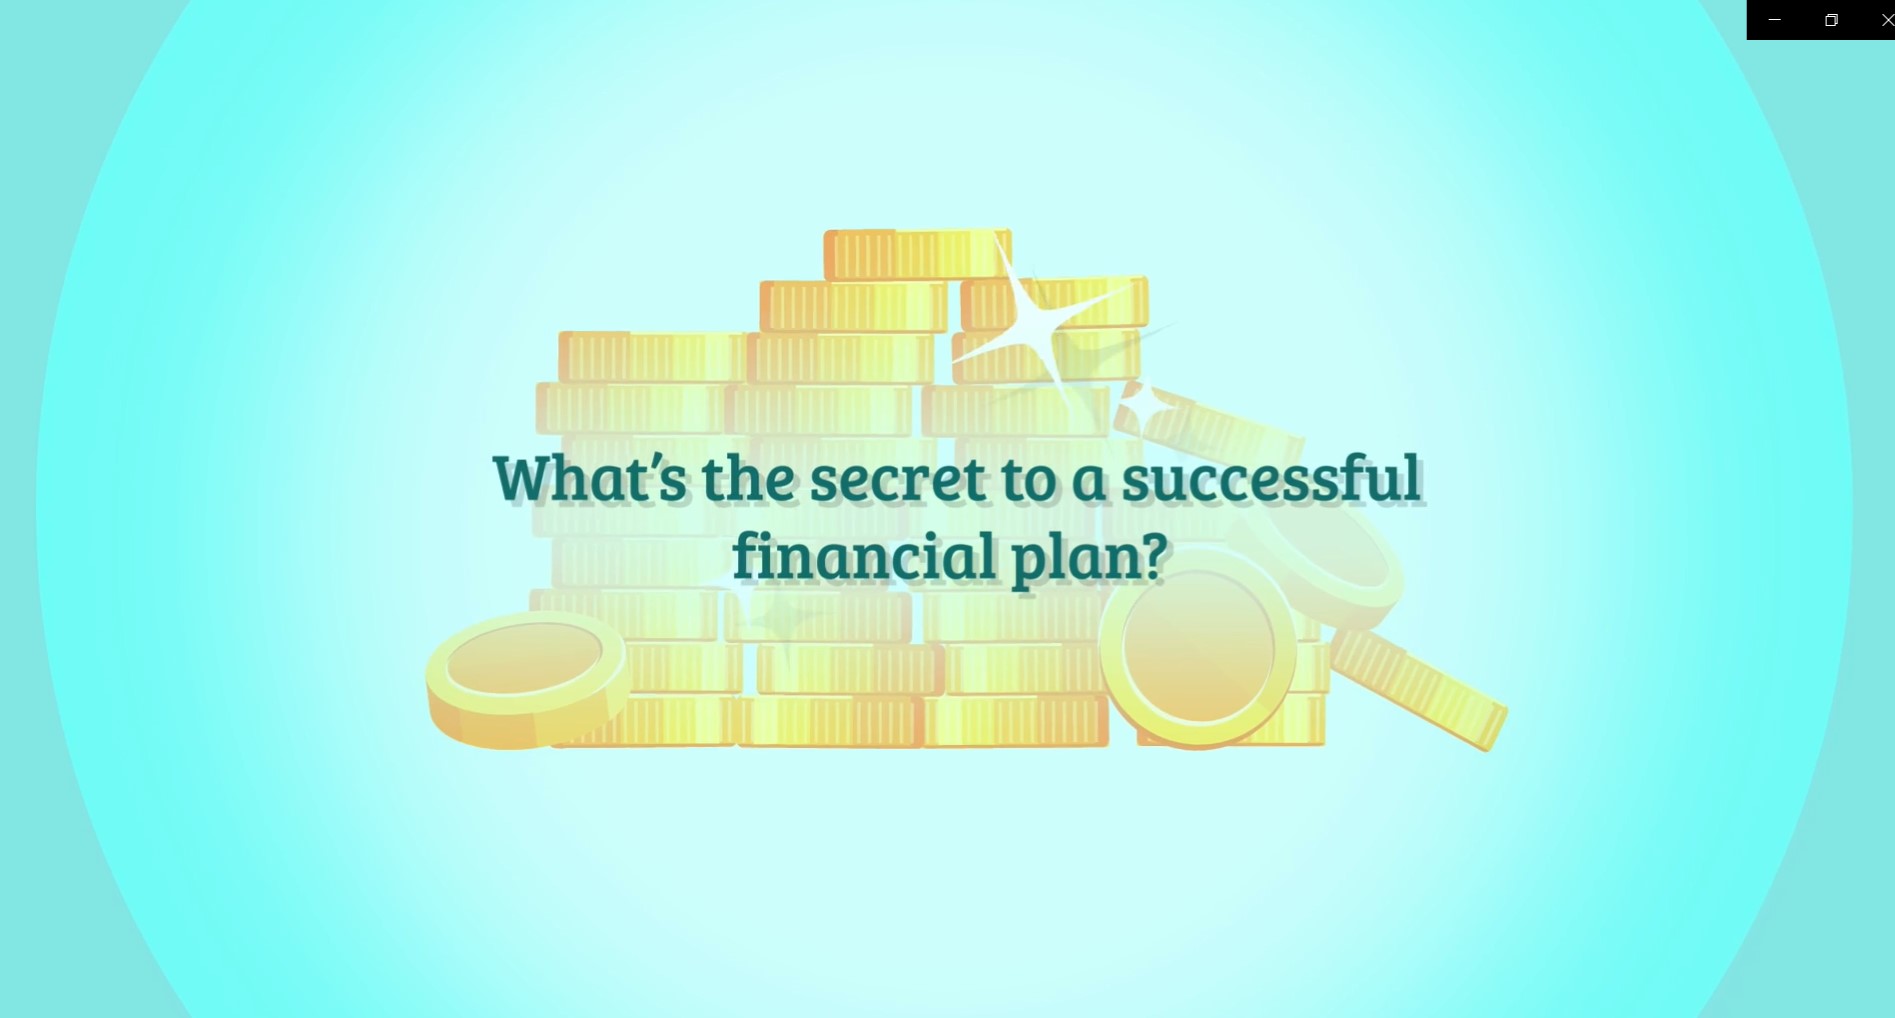 5 Key Pillars of a Financial Plan